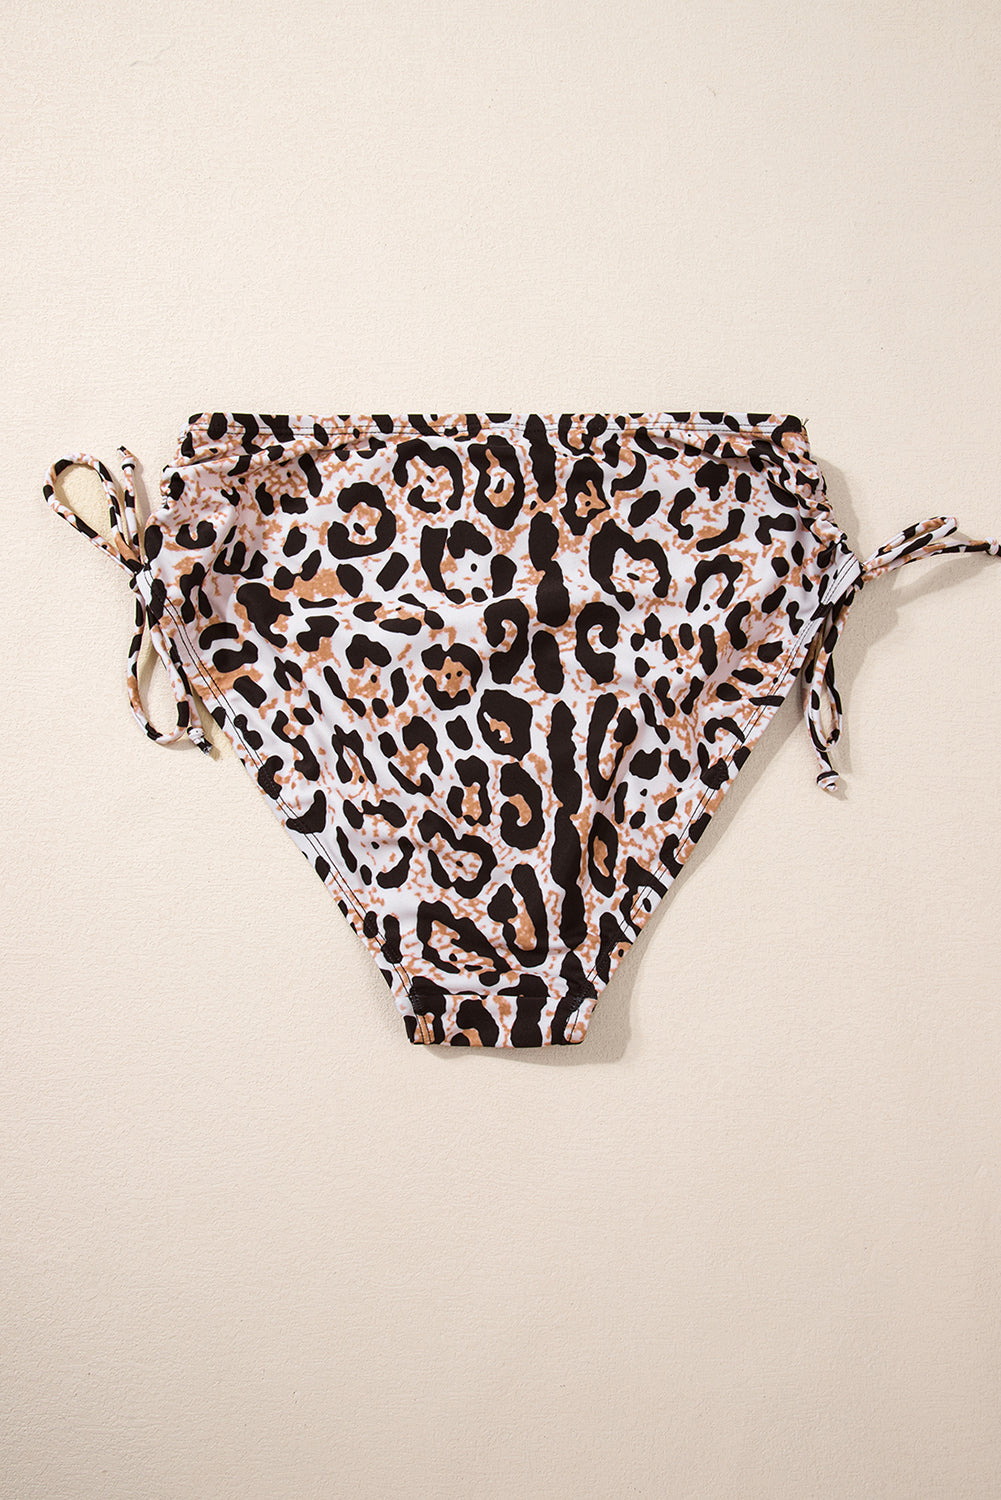 Maillot de bain bikini léopard noir croisé au dos